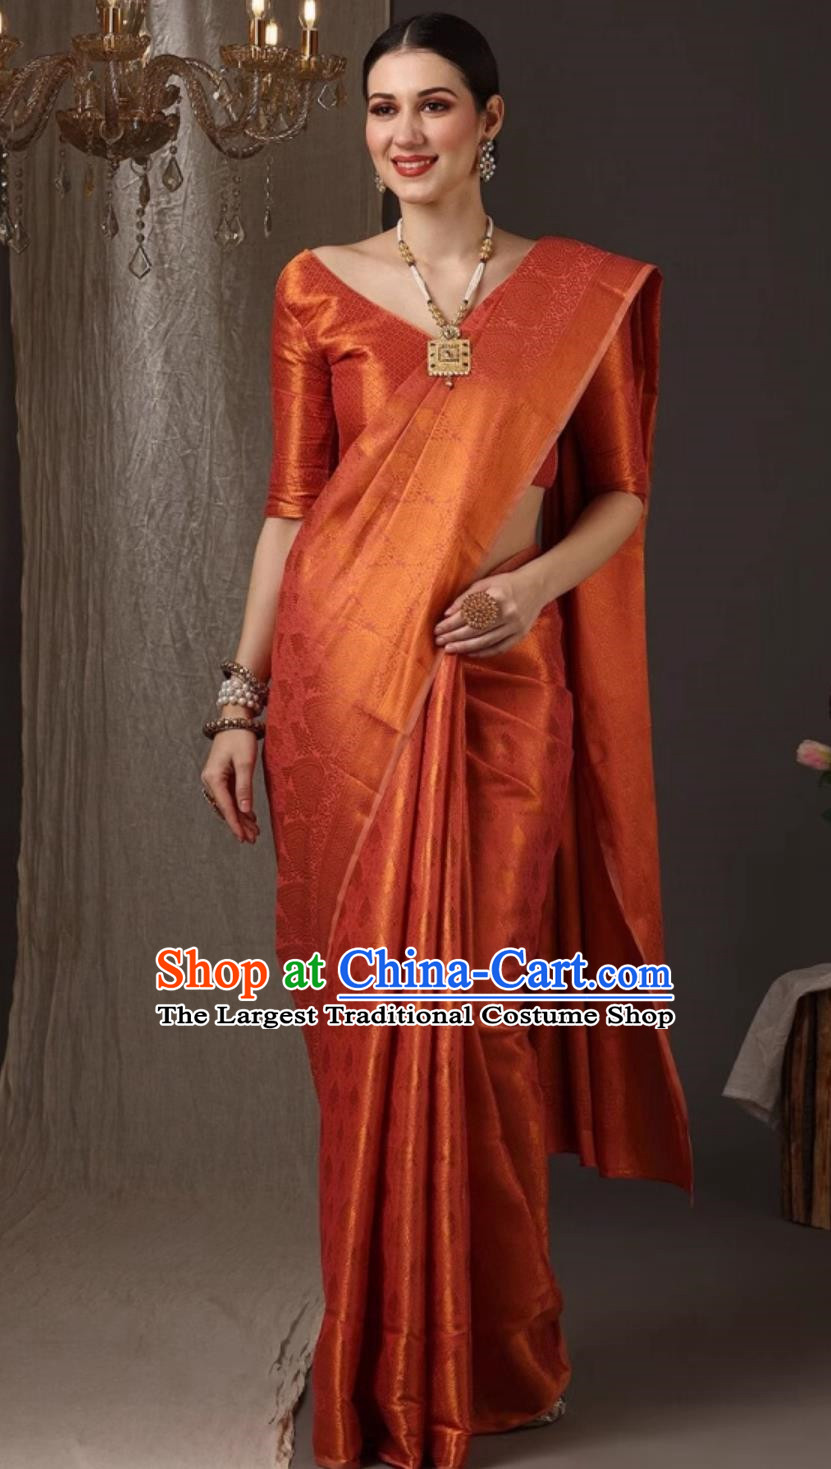 Orange Silk Blended Jacquard Indian Sari Solid Color National Daily Women Wrap Skirt Sari